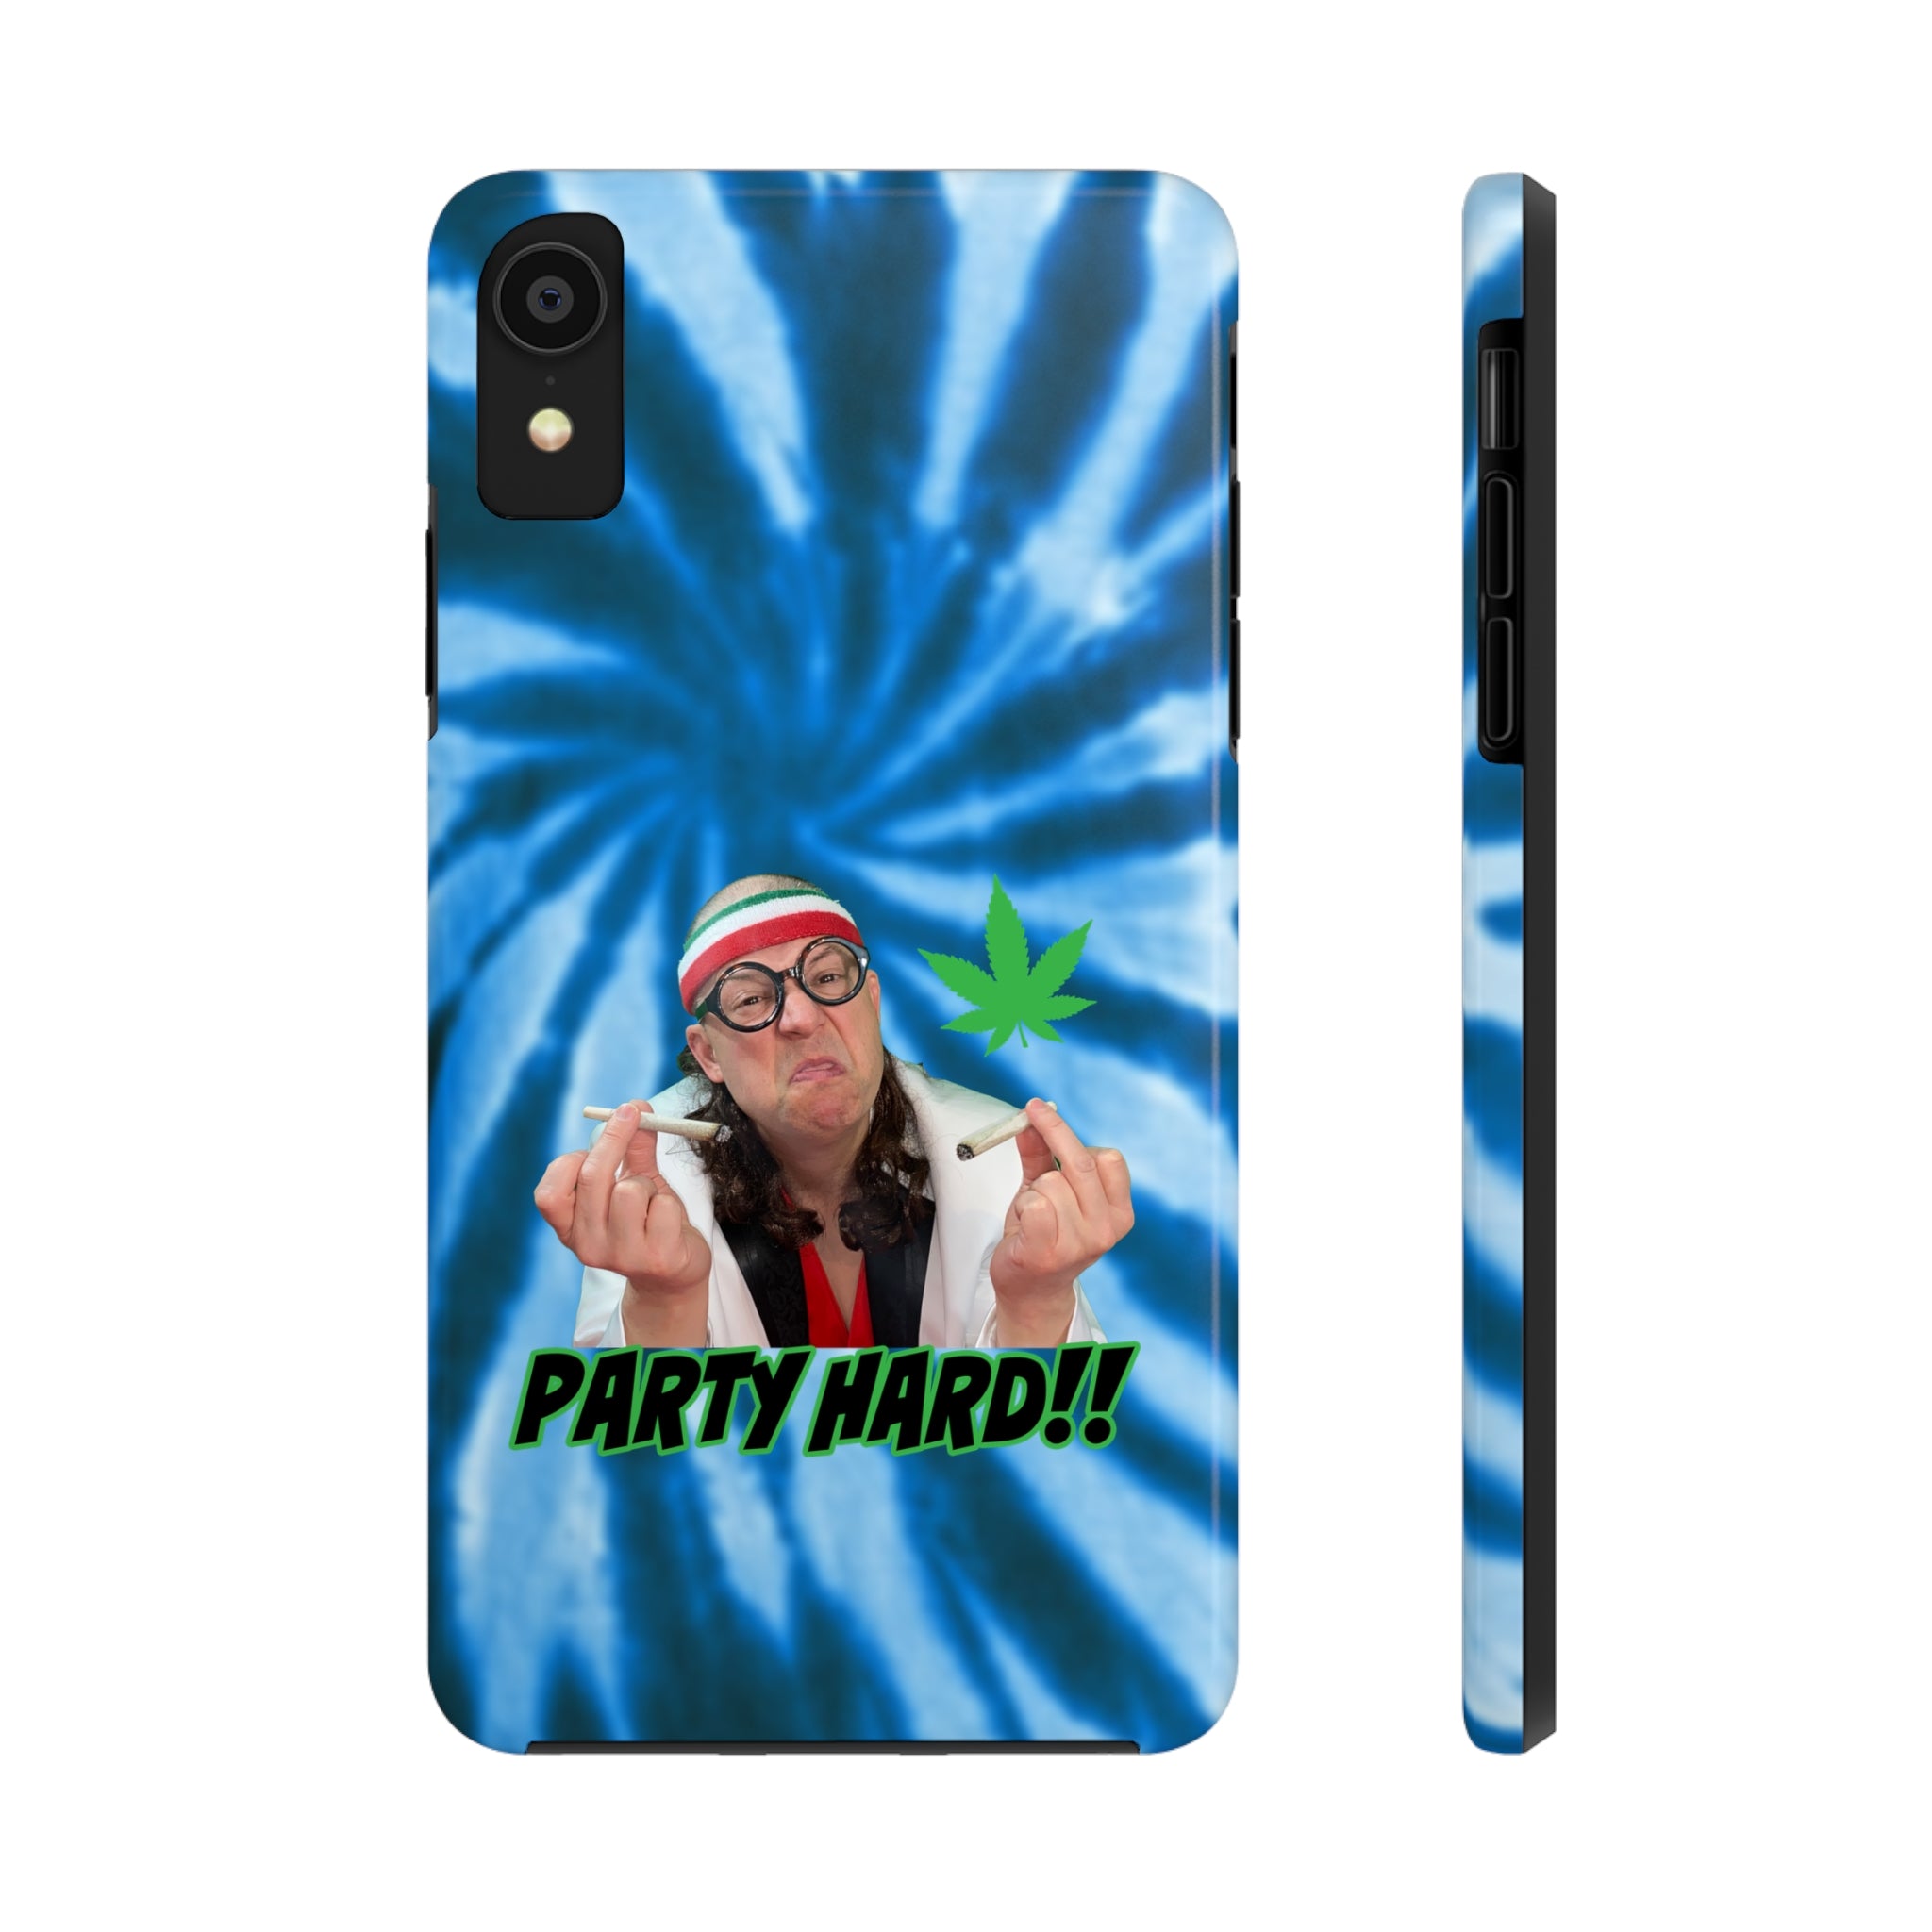 PARTY HARD TIE-DYE Tough Phone Cases